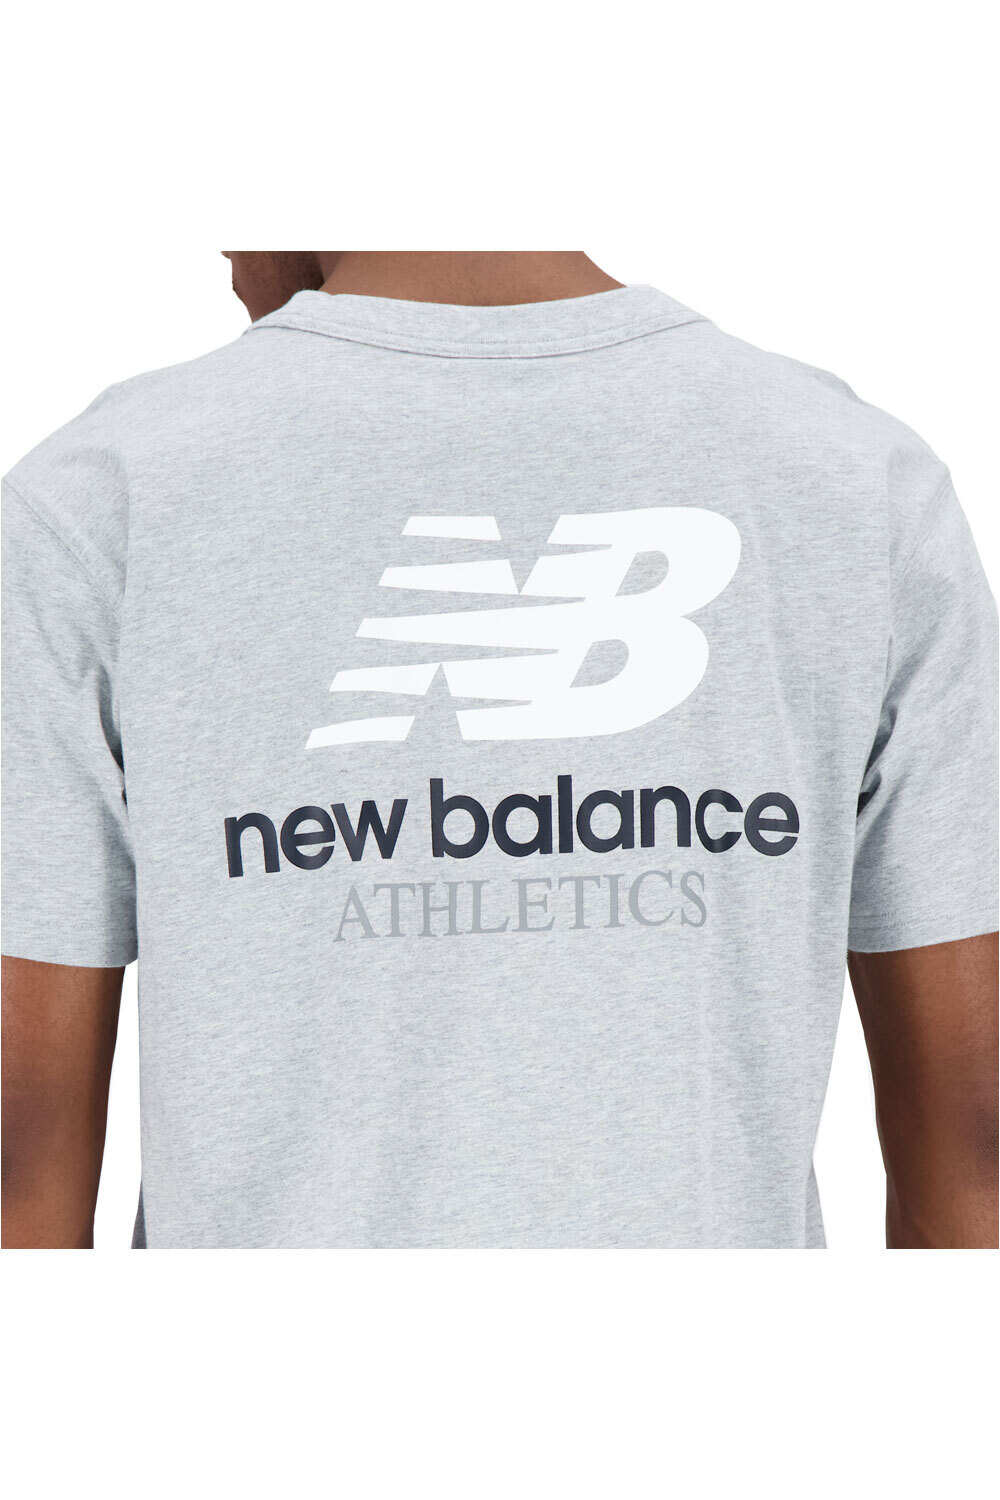 New Balance camiseta manga corta hombre Athletics Remastered Graphic 04